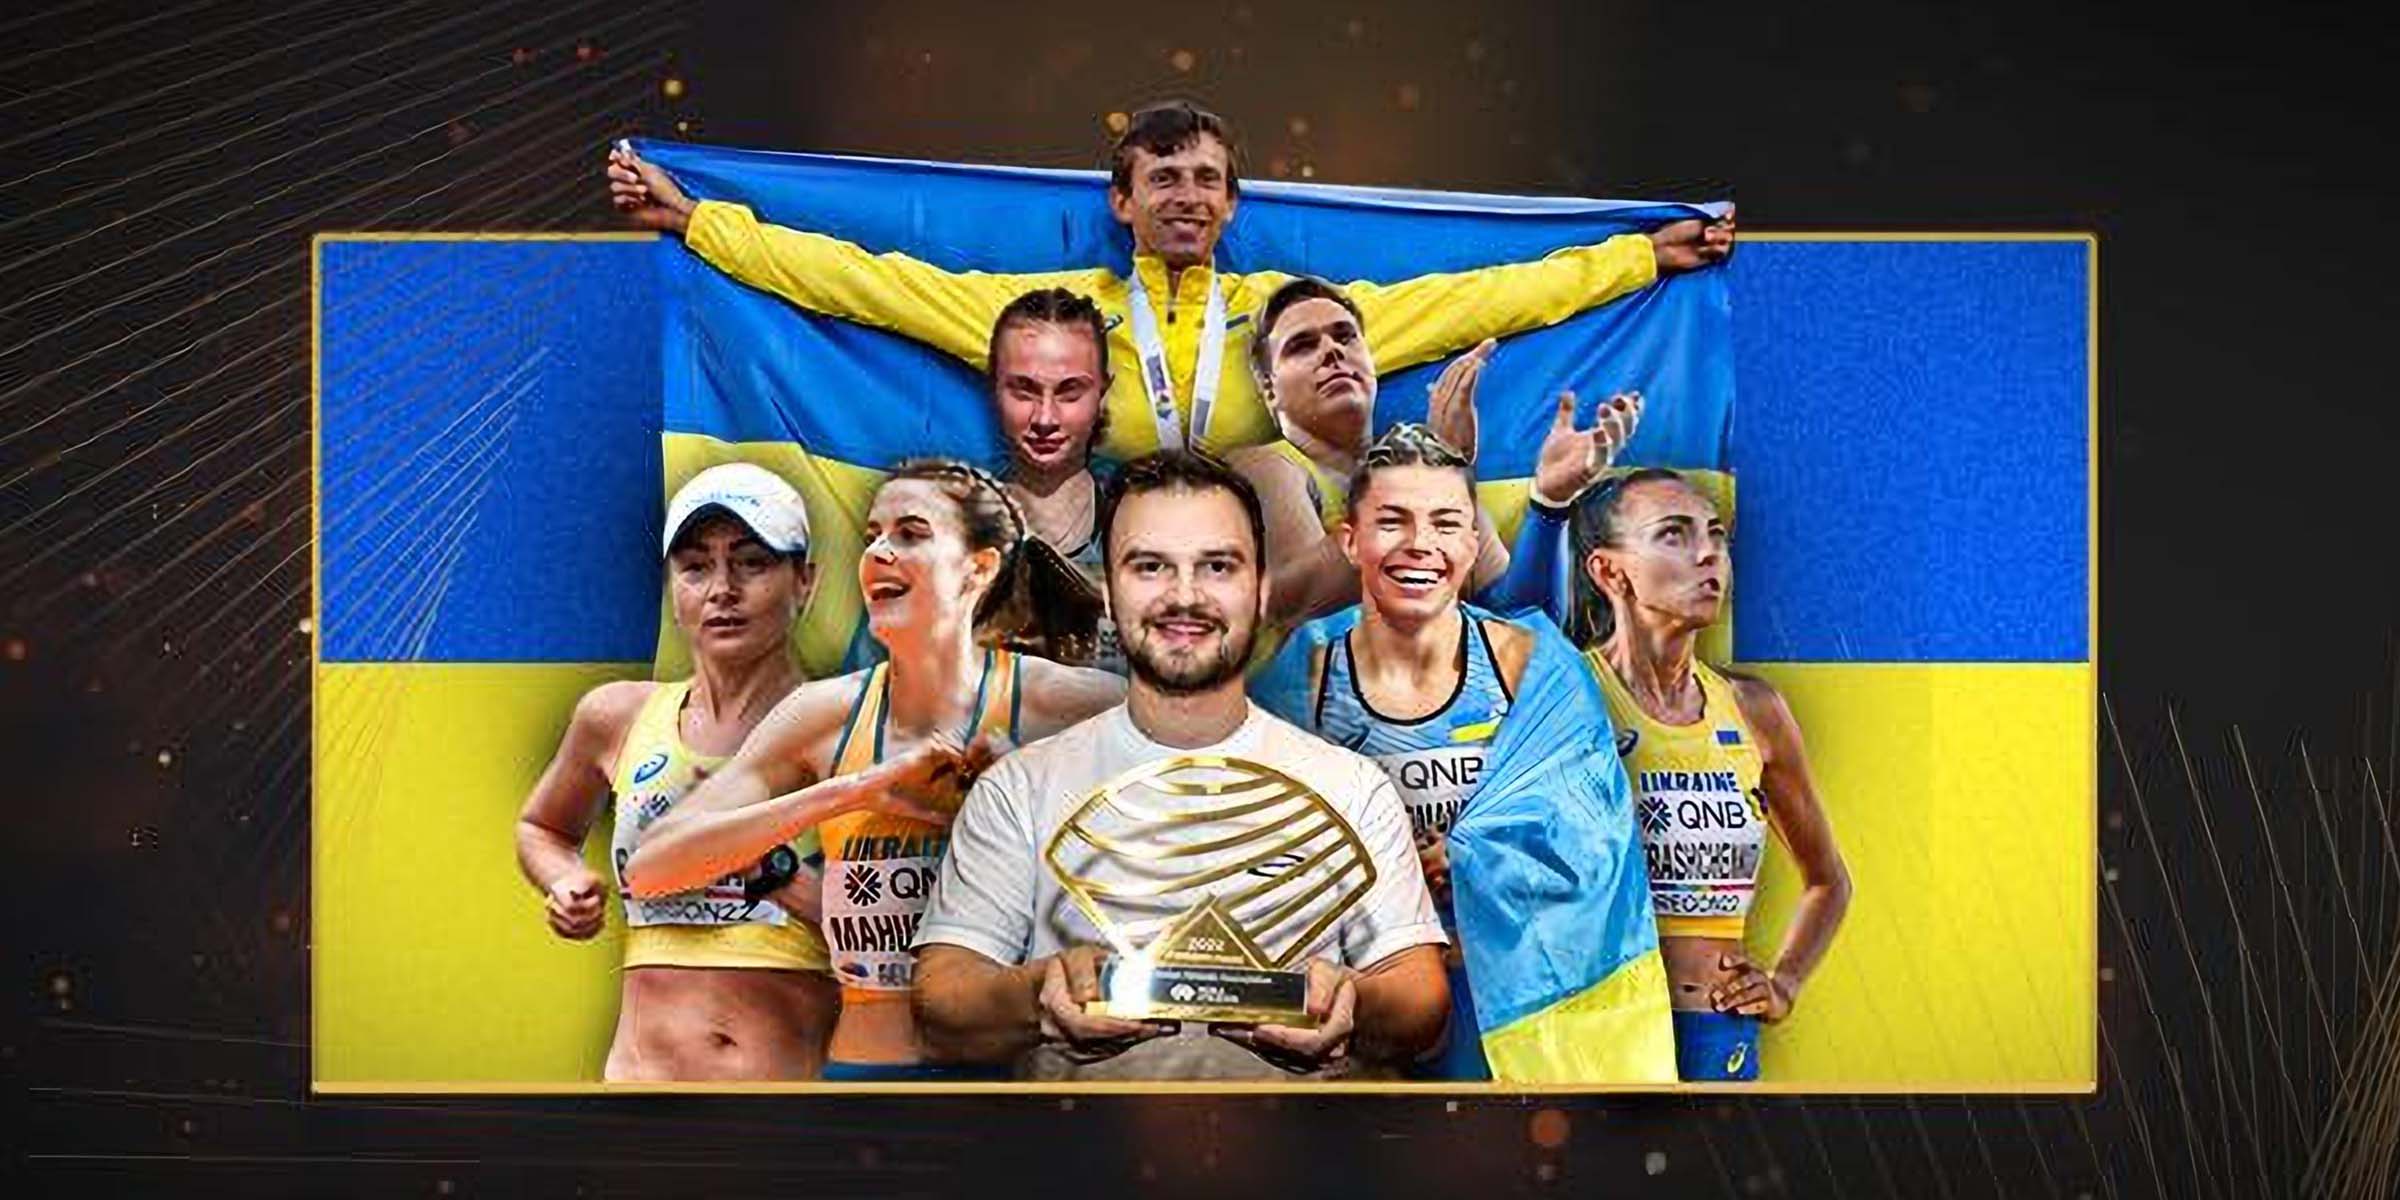 Ukrainian athletic association wins president’s award 2022